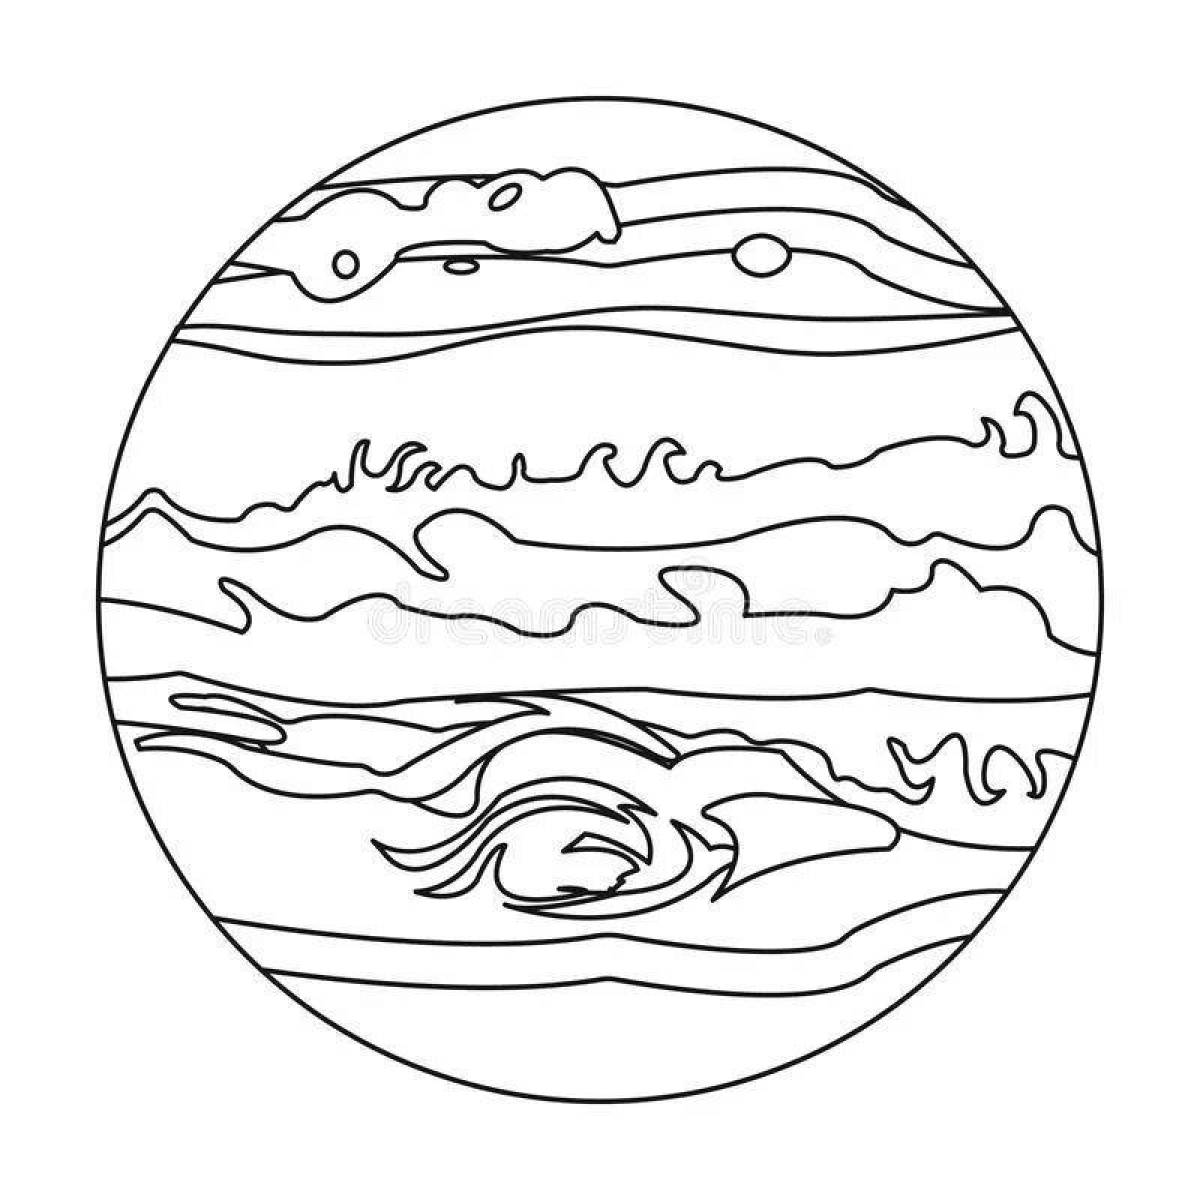 Планета Нептун раскраска для детей